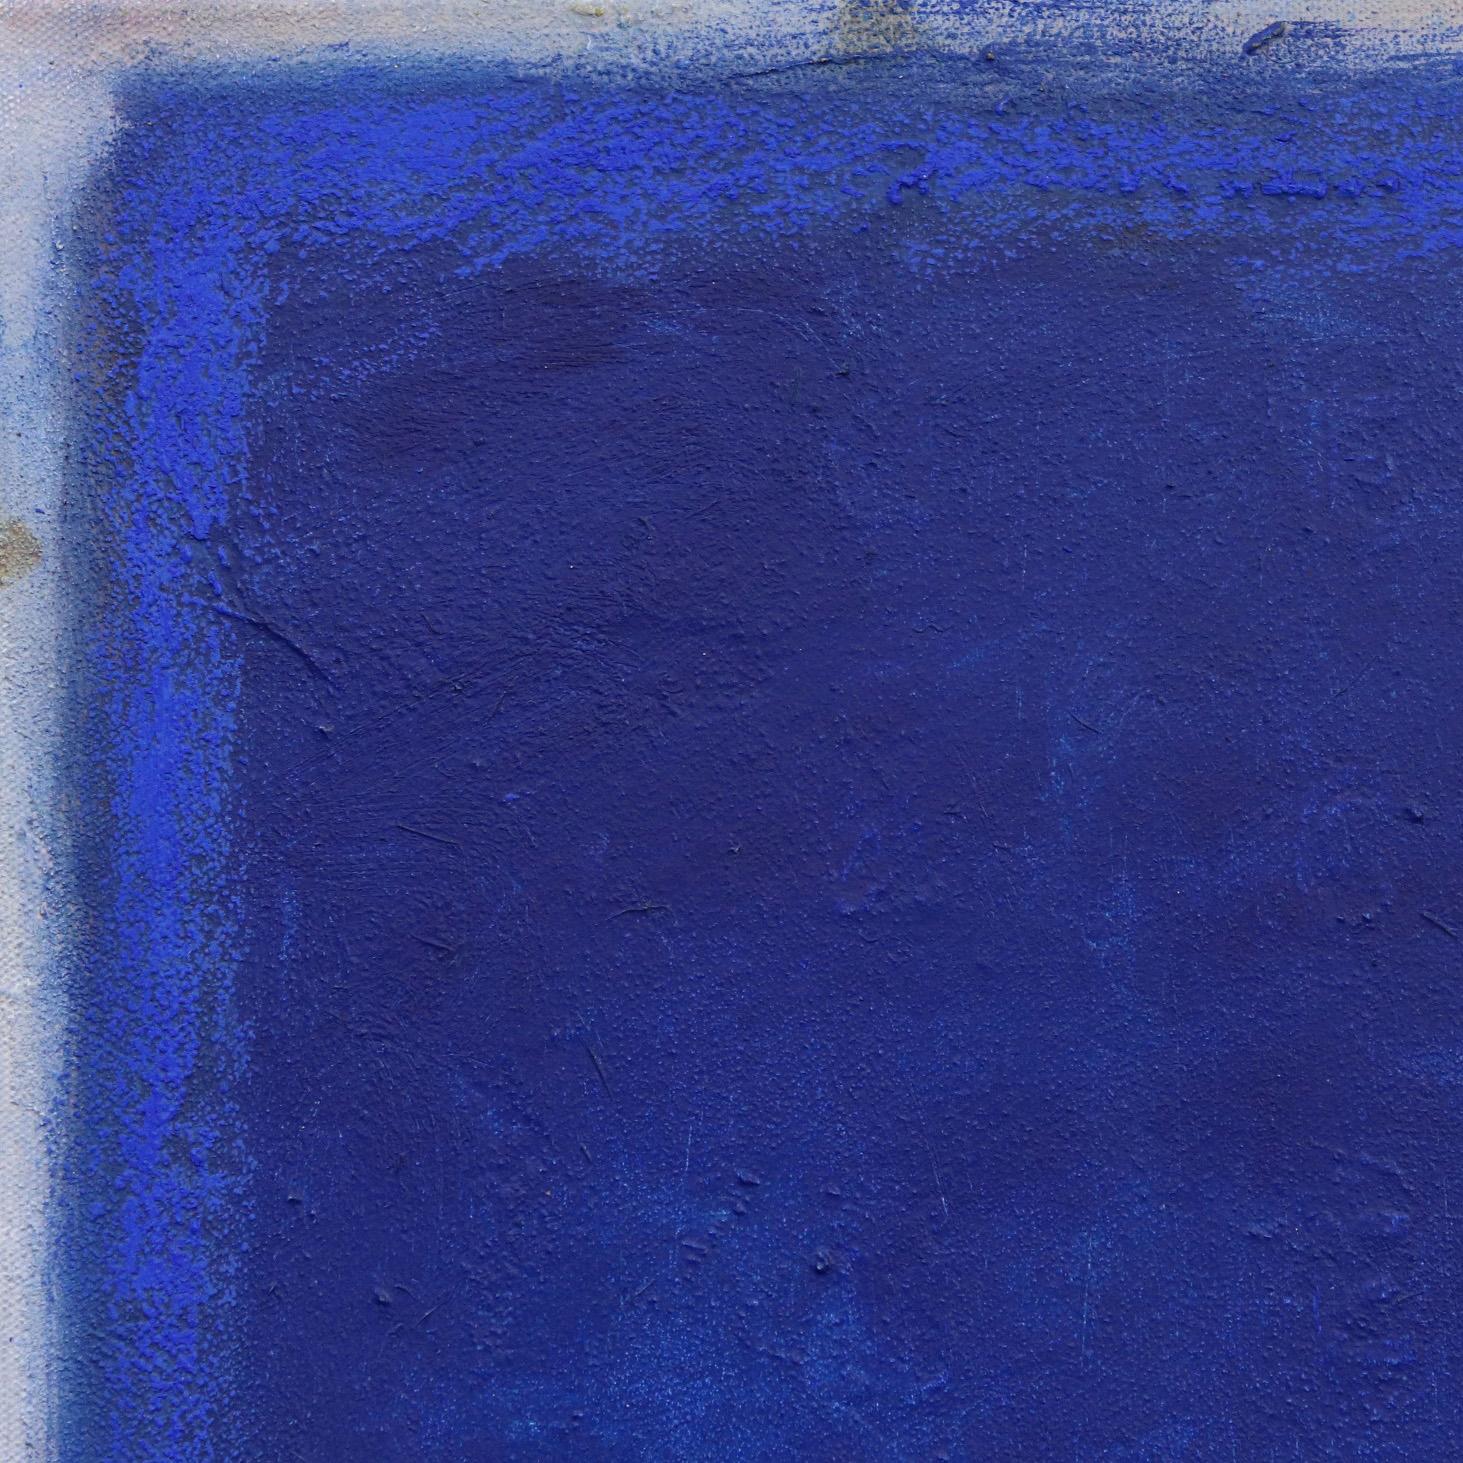 AWH 285 - Original Abstract Ultramarine Blue Minimalist Colorfield Oil Painting 1